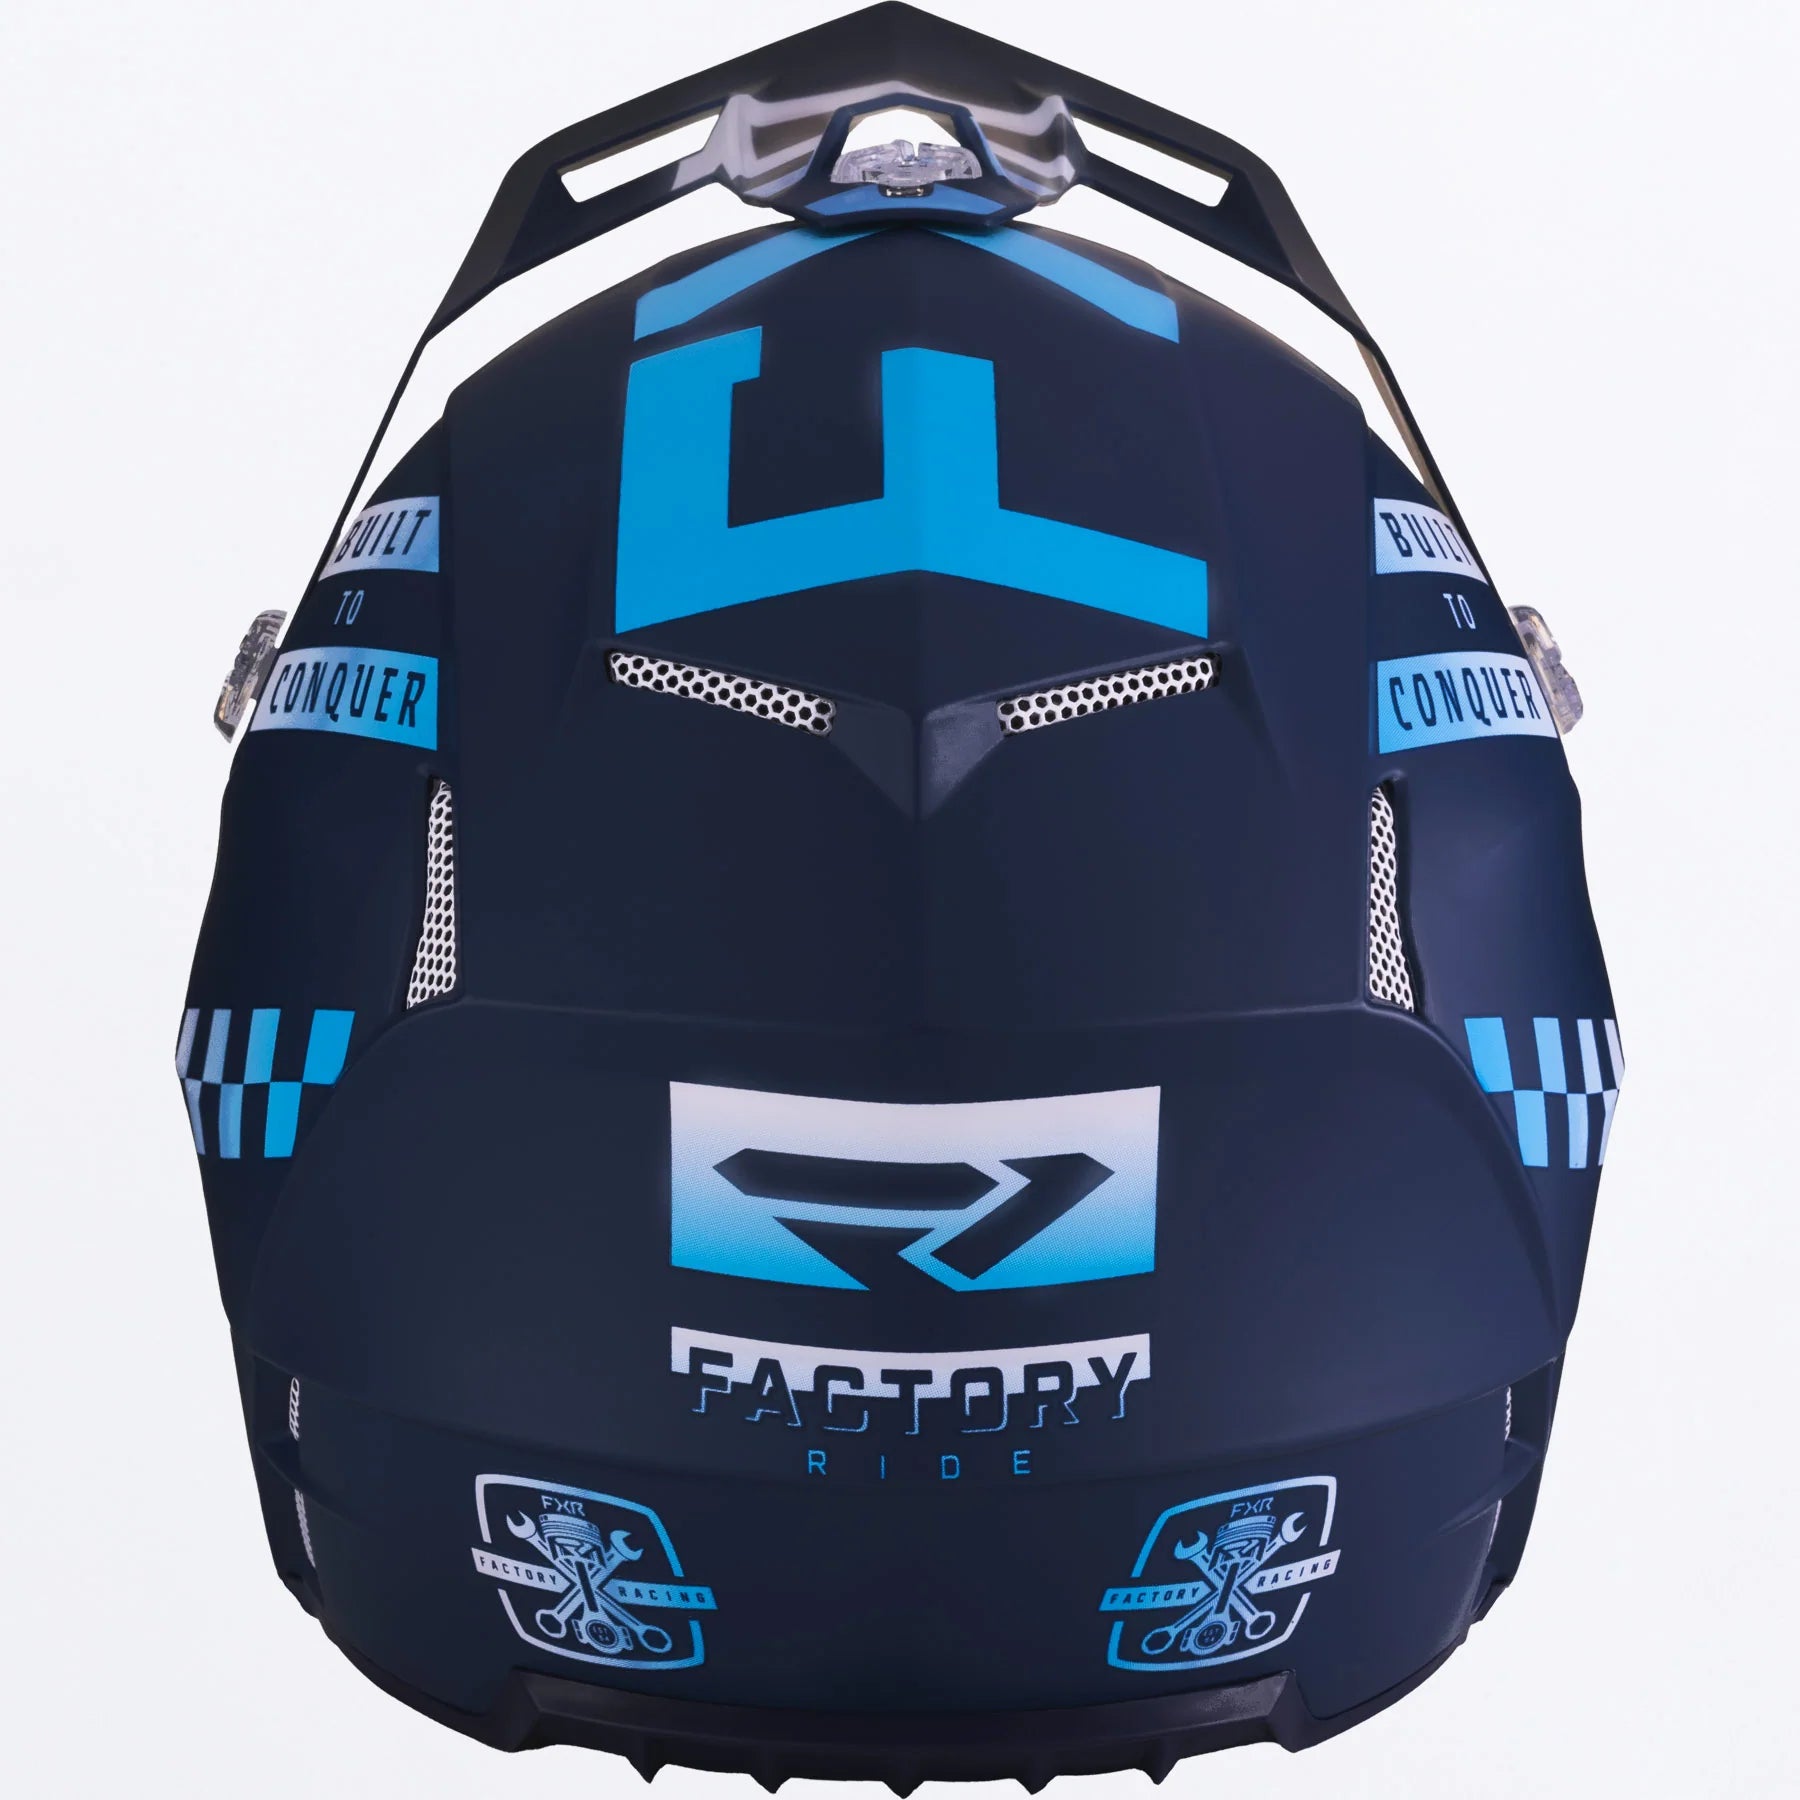 FXR Clutch Gladiator Helmet Blue